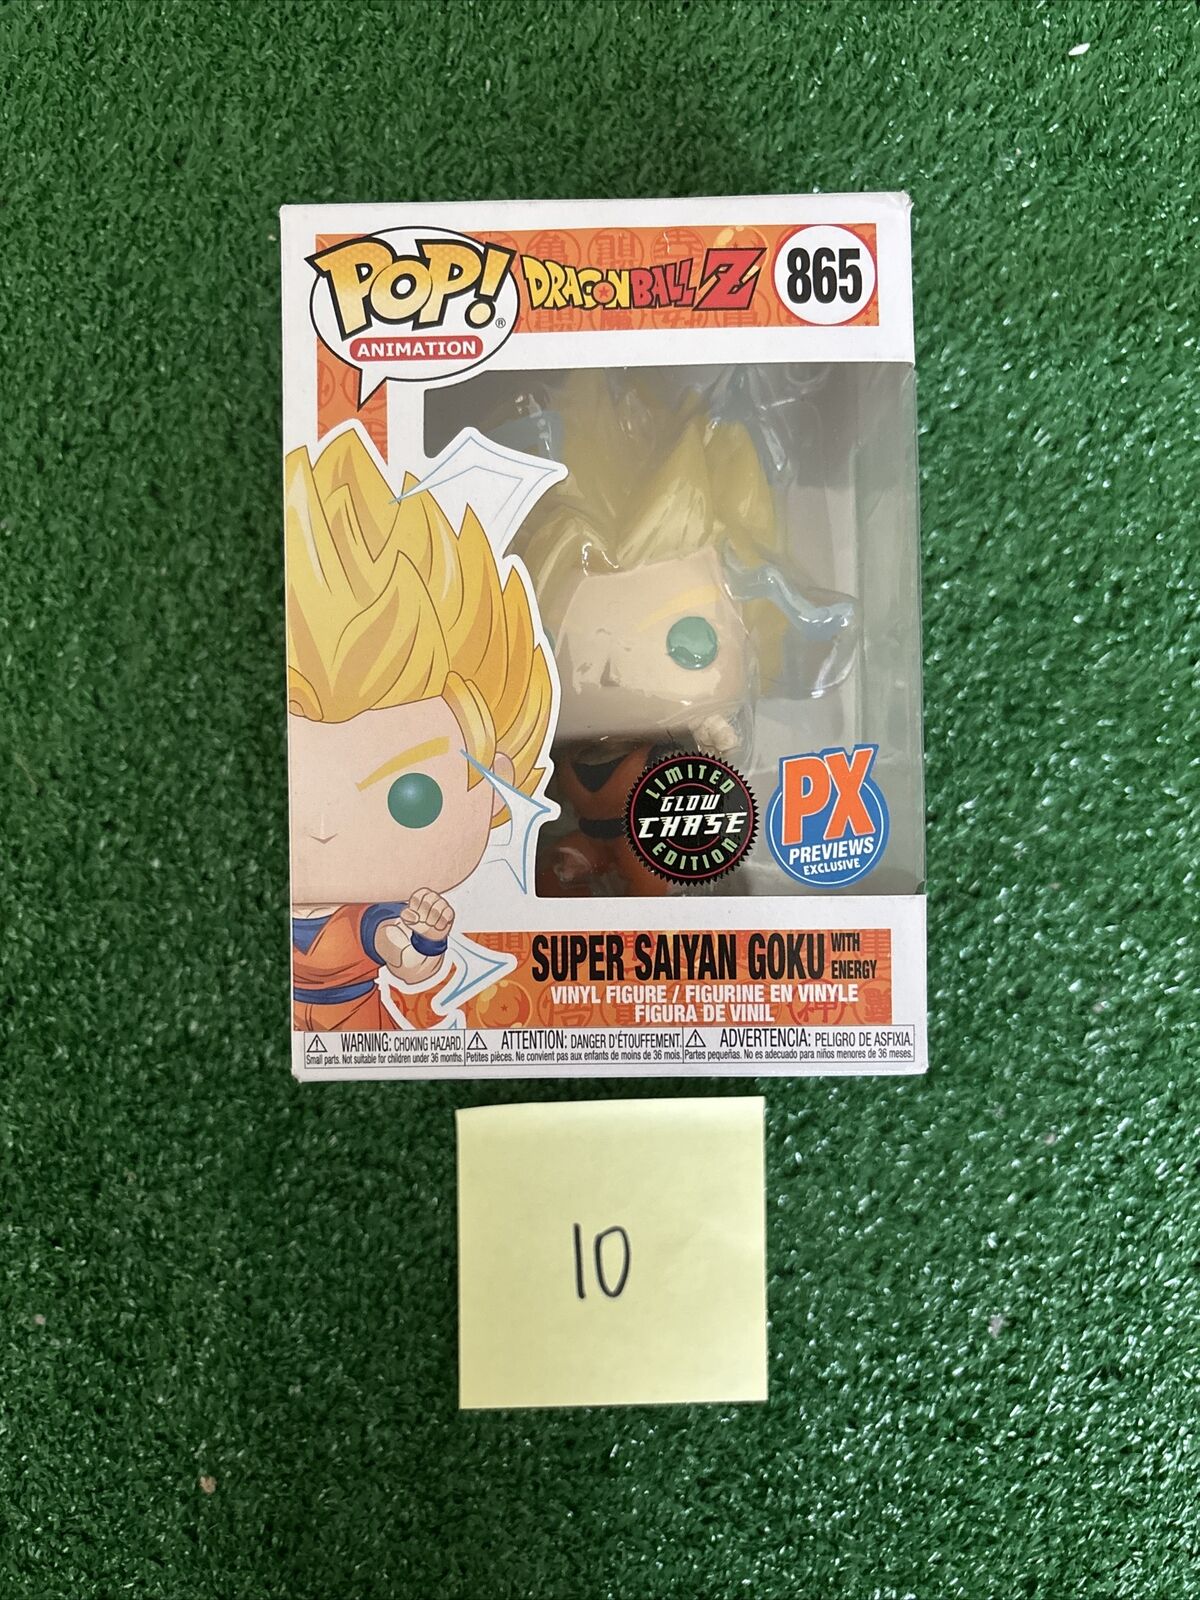 Funko Pop Dragon Ball Z Super Saiyan Goku With Energy Glow Chase PX #865 (#10)